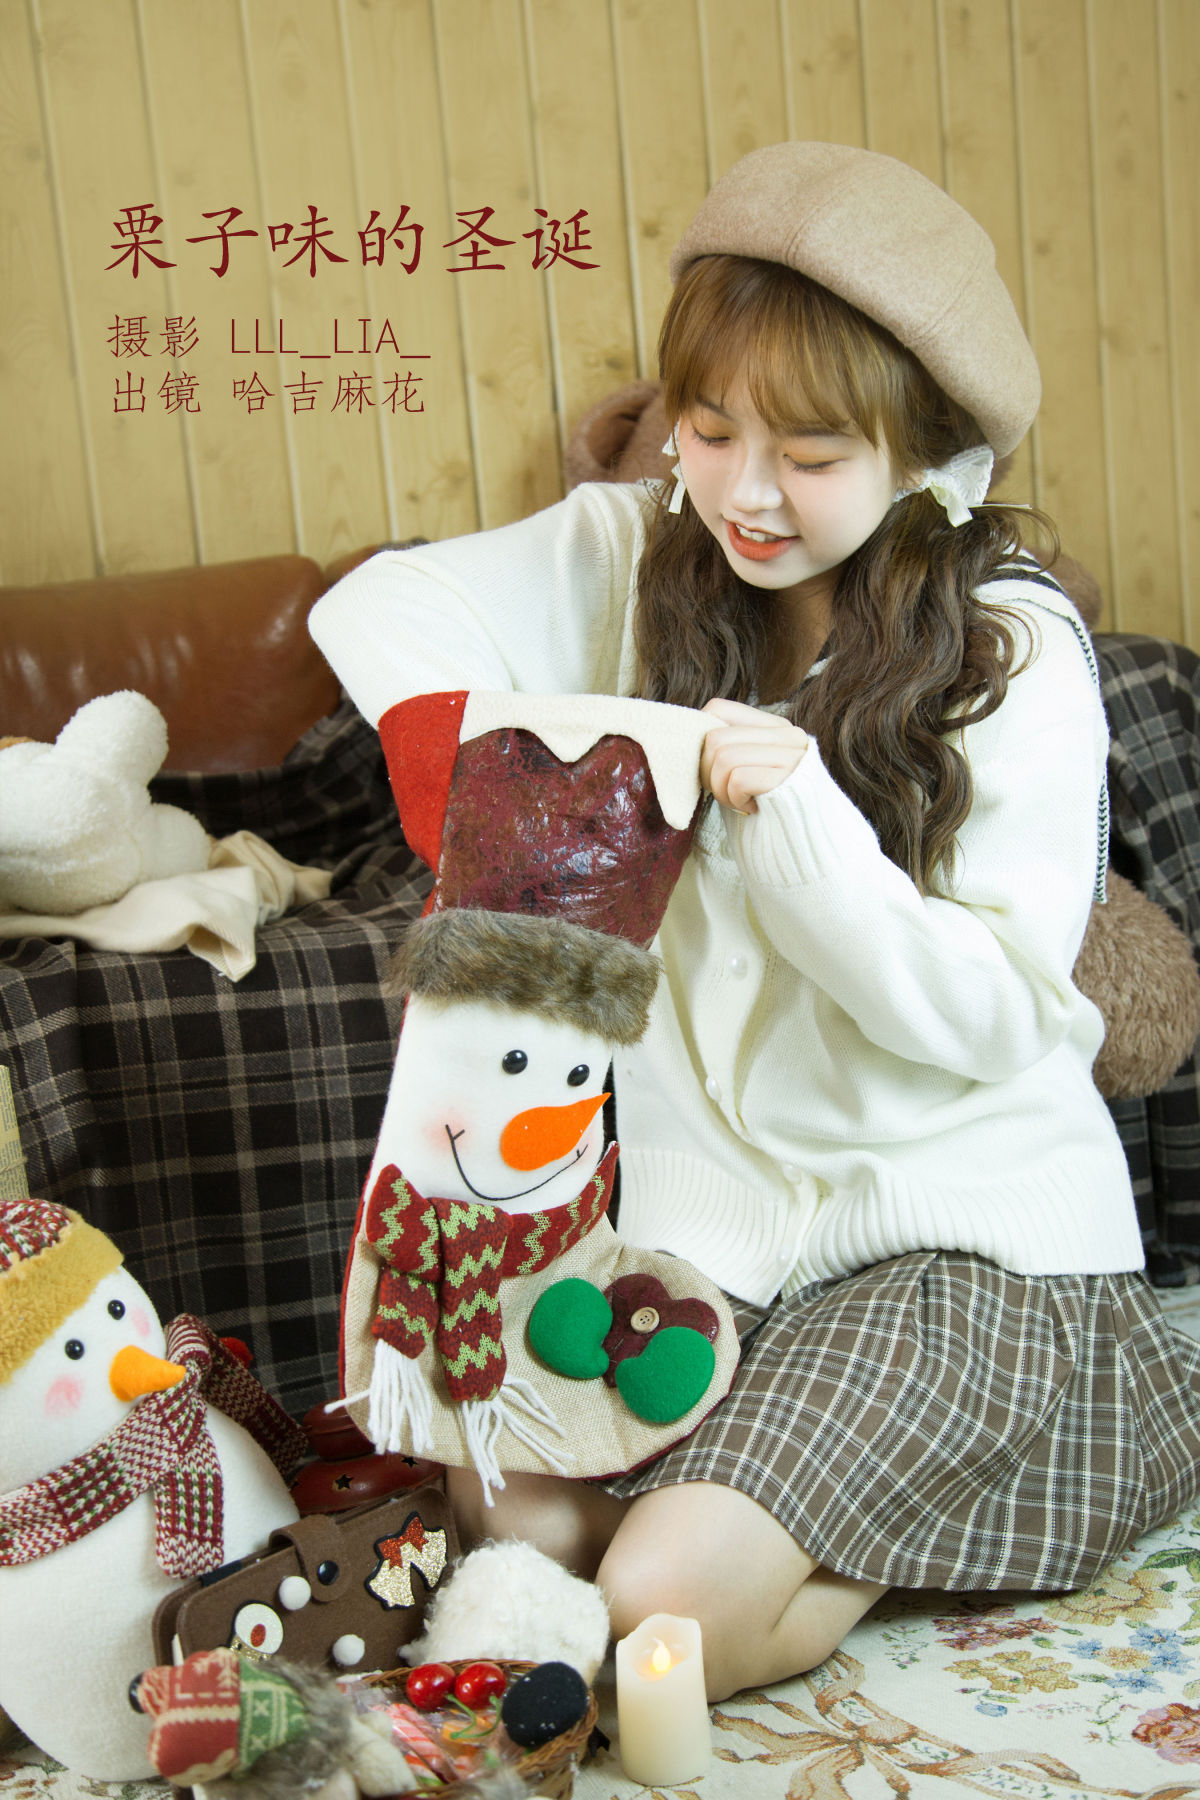 LLL_Lia__哈吉麻花《栗子味的圣诞》美图作品图片1